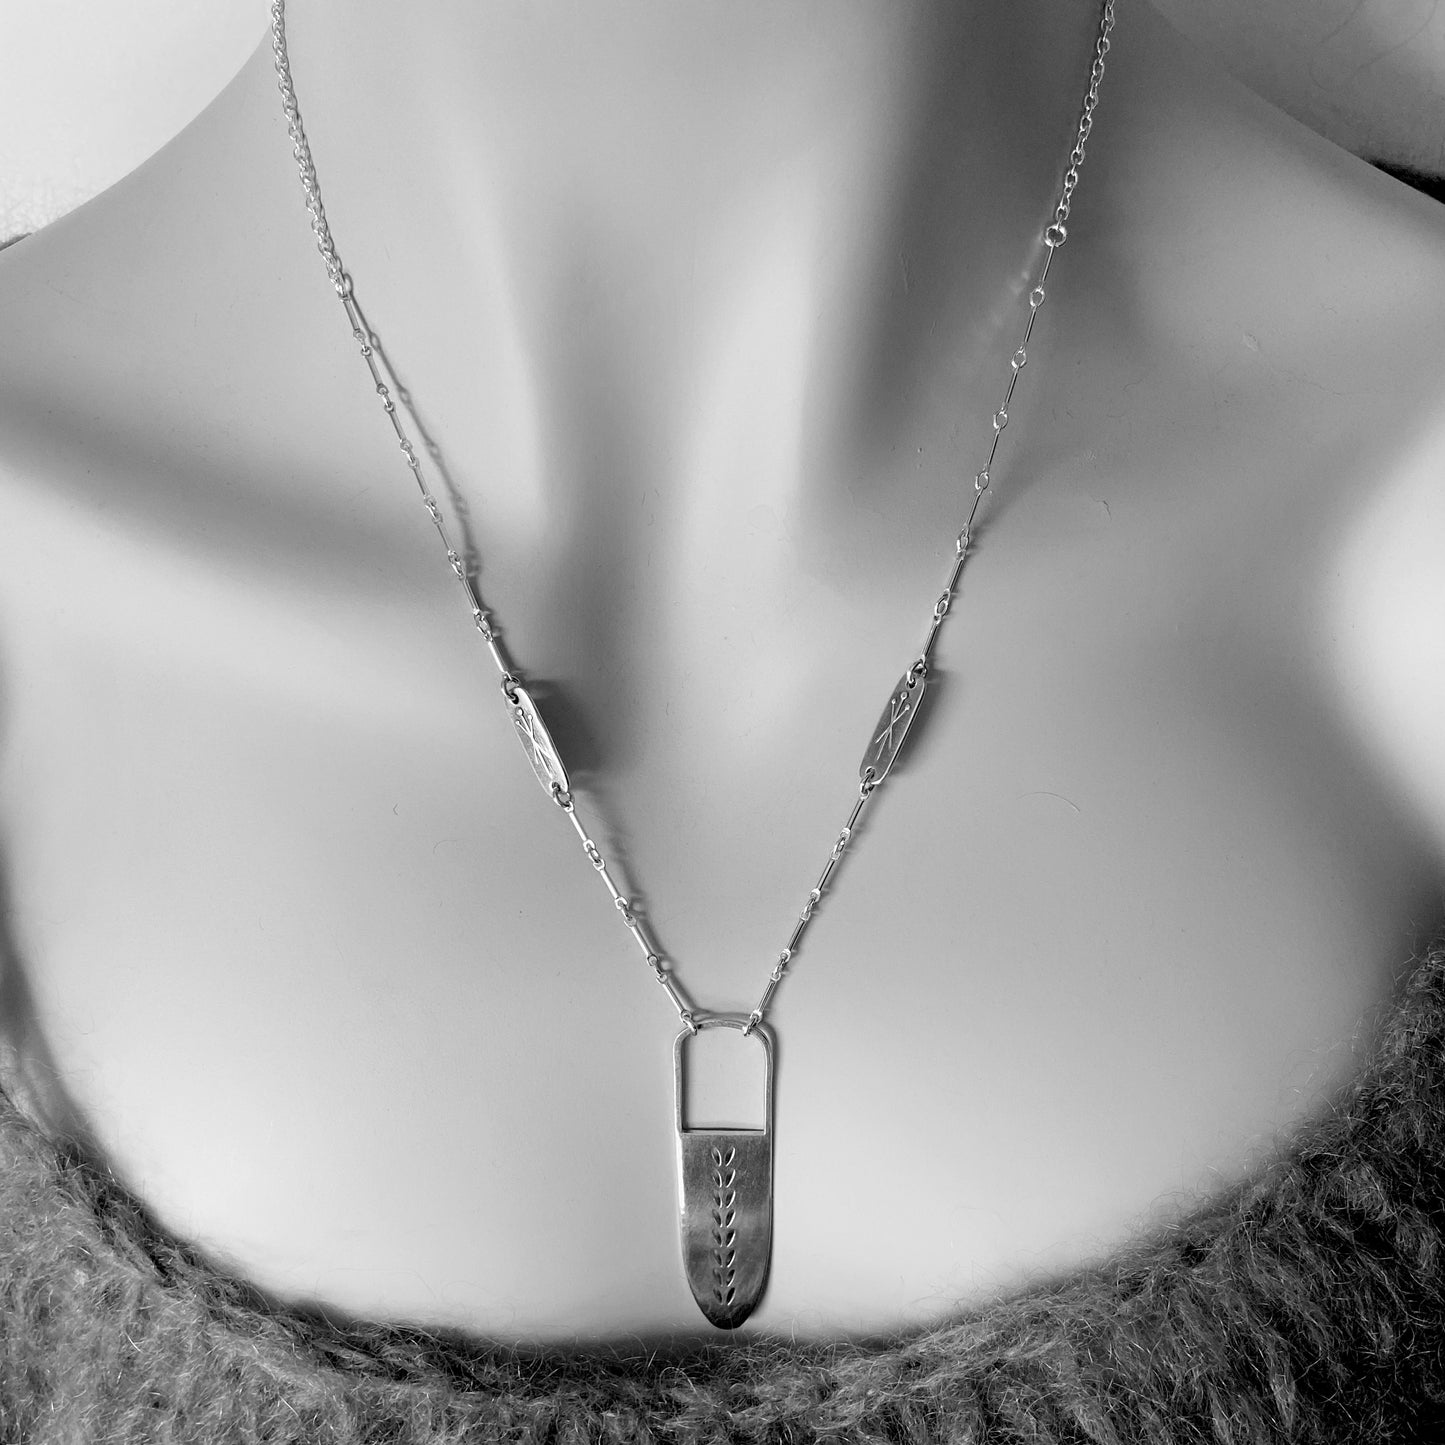 Stockinette Sleeve Necklace with Needles